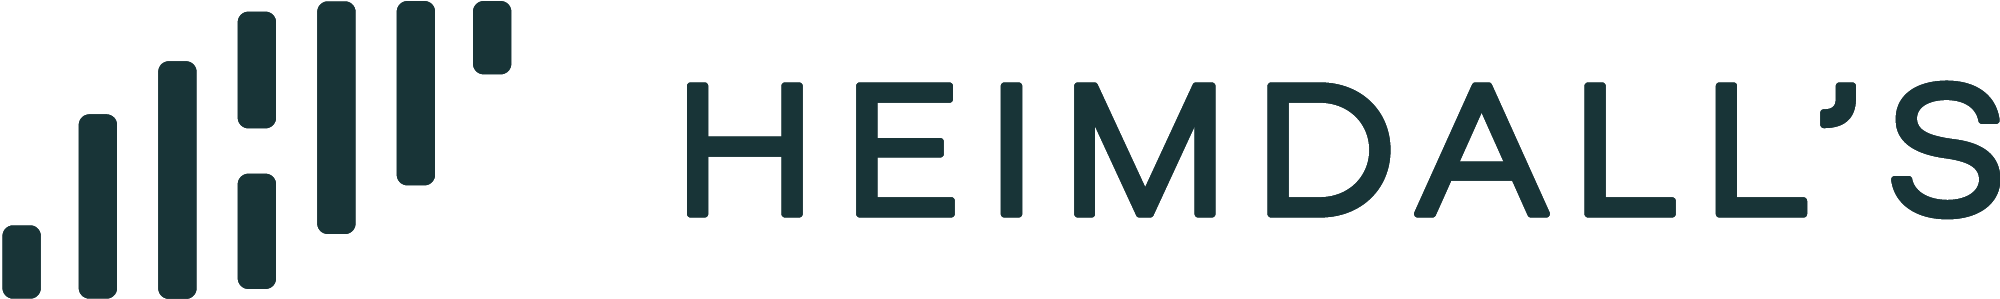 HEIMDALLS Hørecenters logo